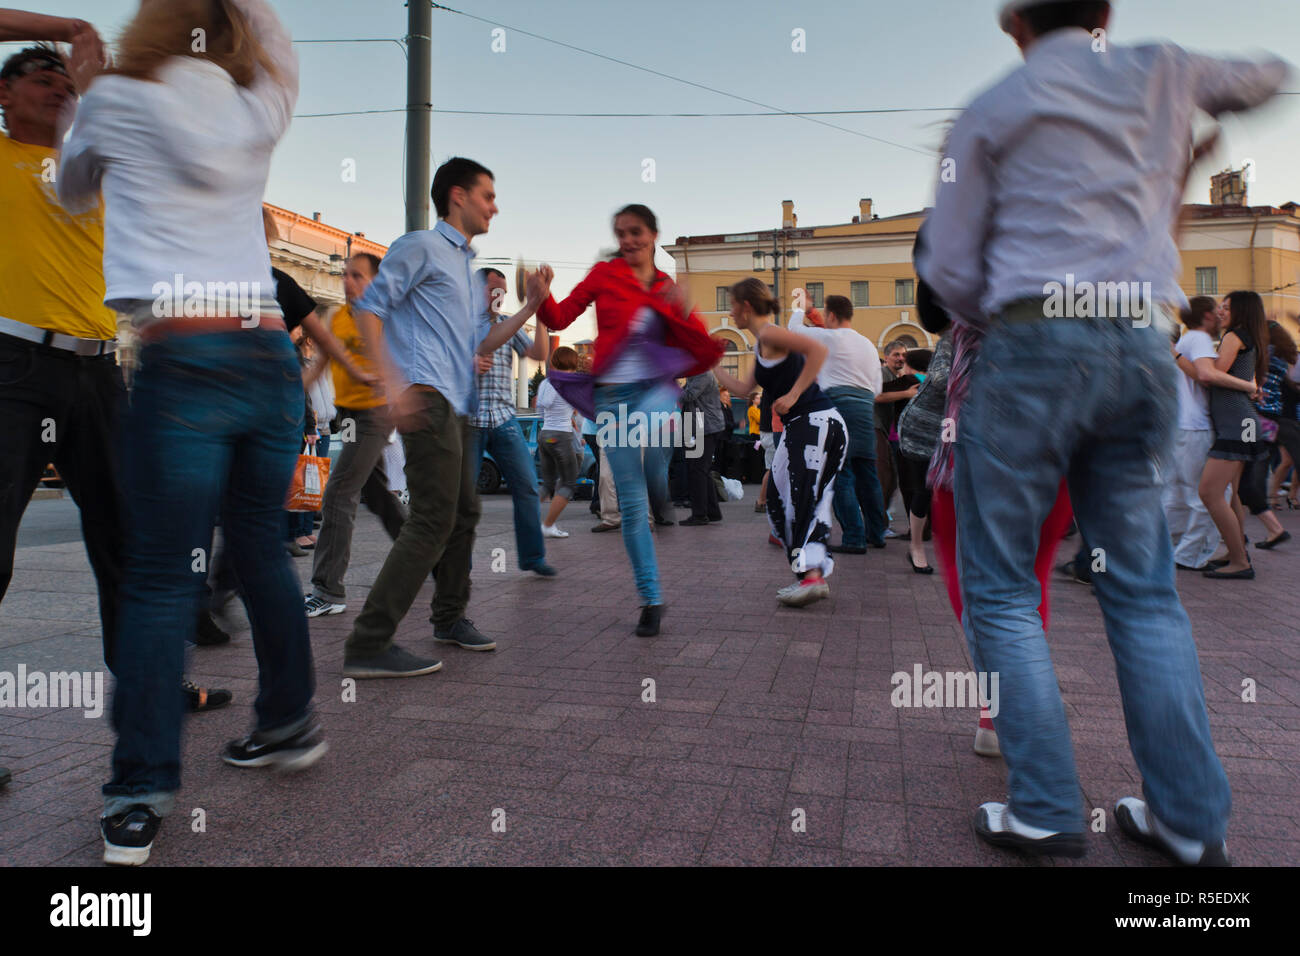 Russia, Saint Petersburg, Vasilevsky Island, Birzhevaya Square, Salsa dancing on The Strelka, White Nights festival Stock Photo